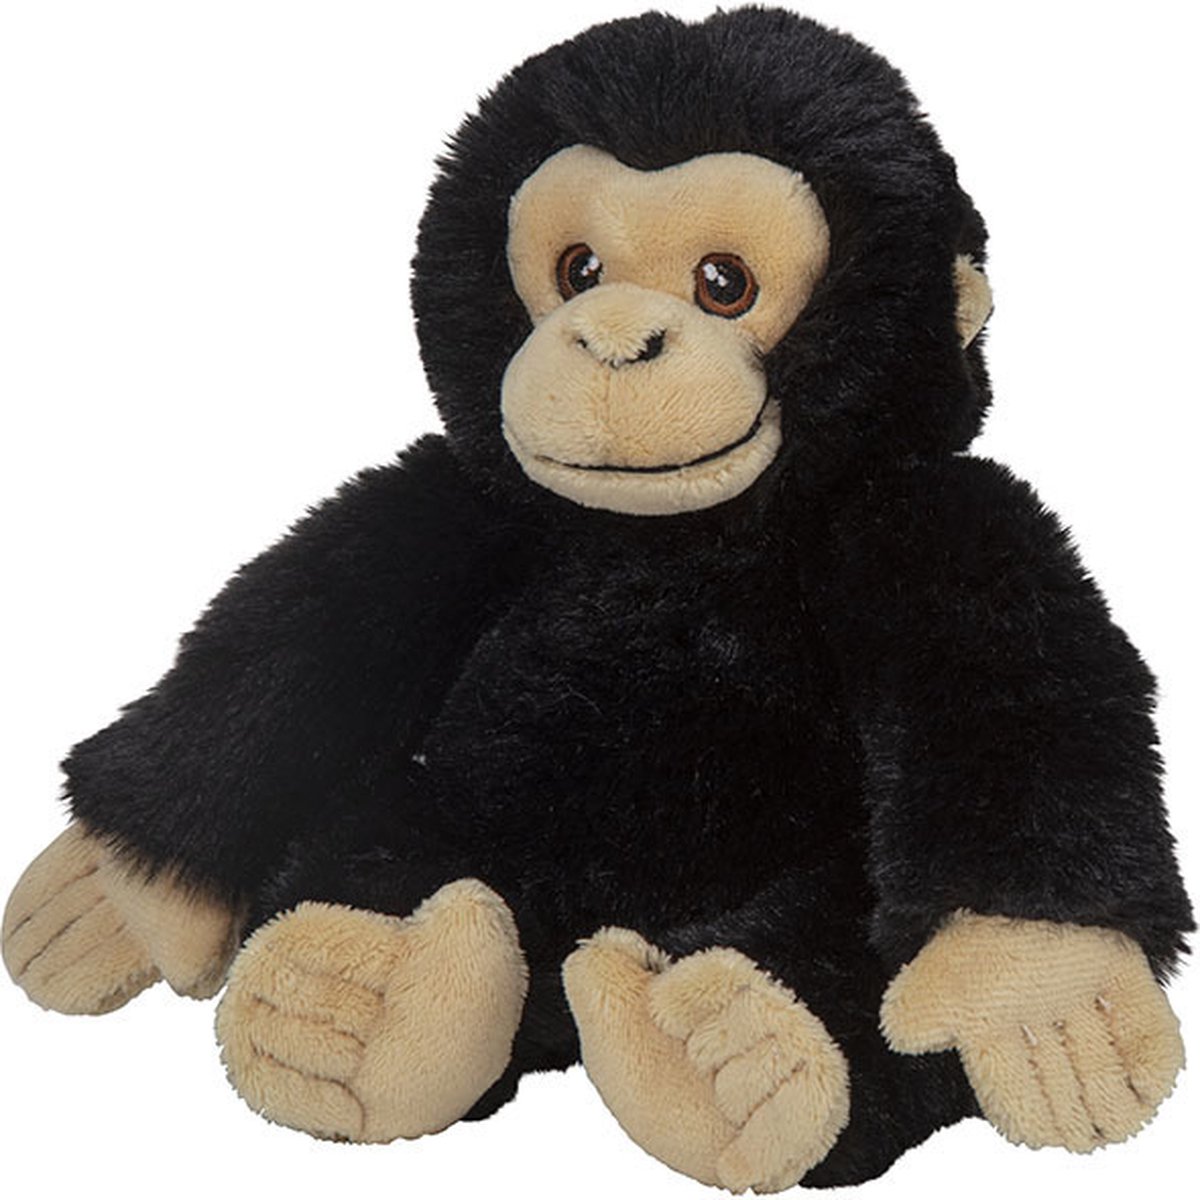 Pluche dieren knuffels Chimpansee aap van 16 cm - Knuffeldieren speelgoed